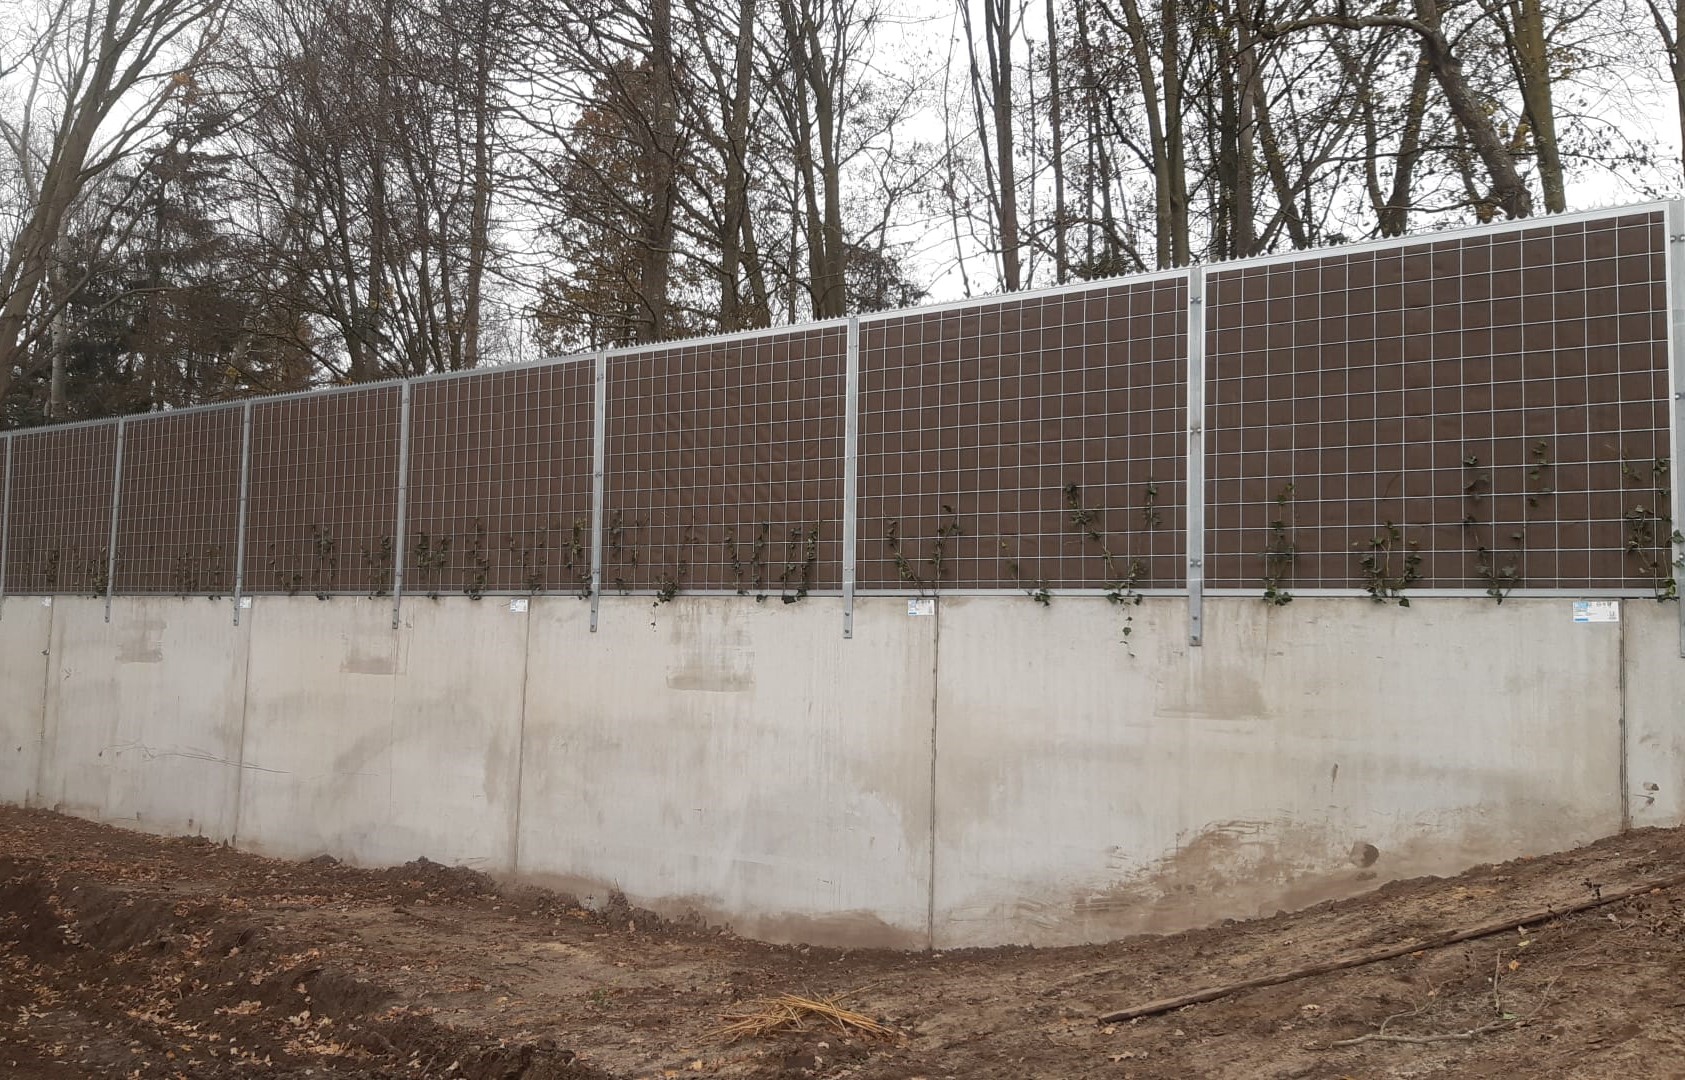 Bosch Beton - Keerwanden met kokowall als geluidswand en terreinafscheiding in Boxtel